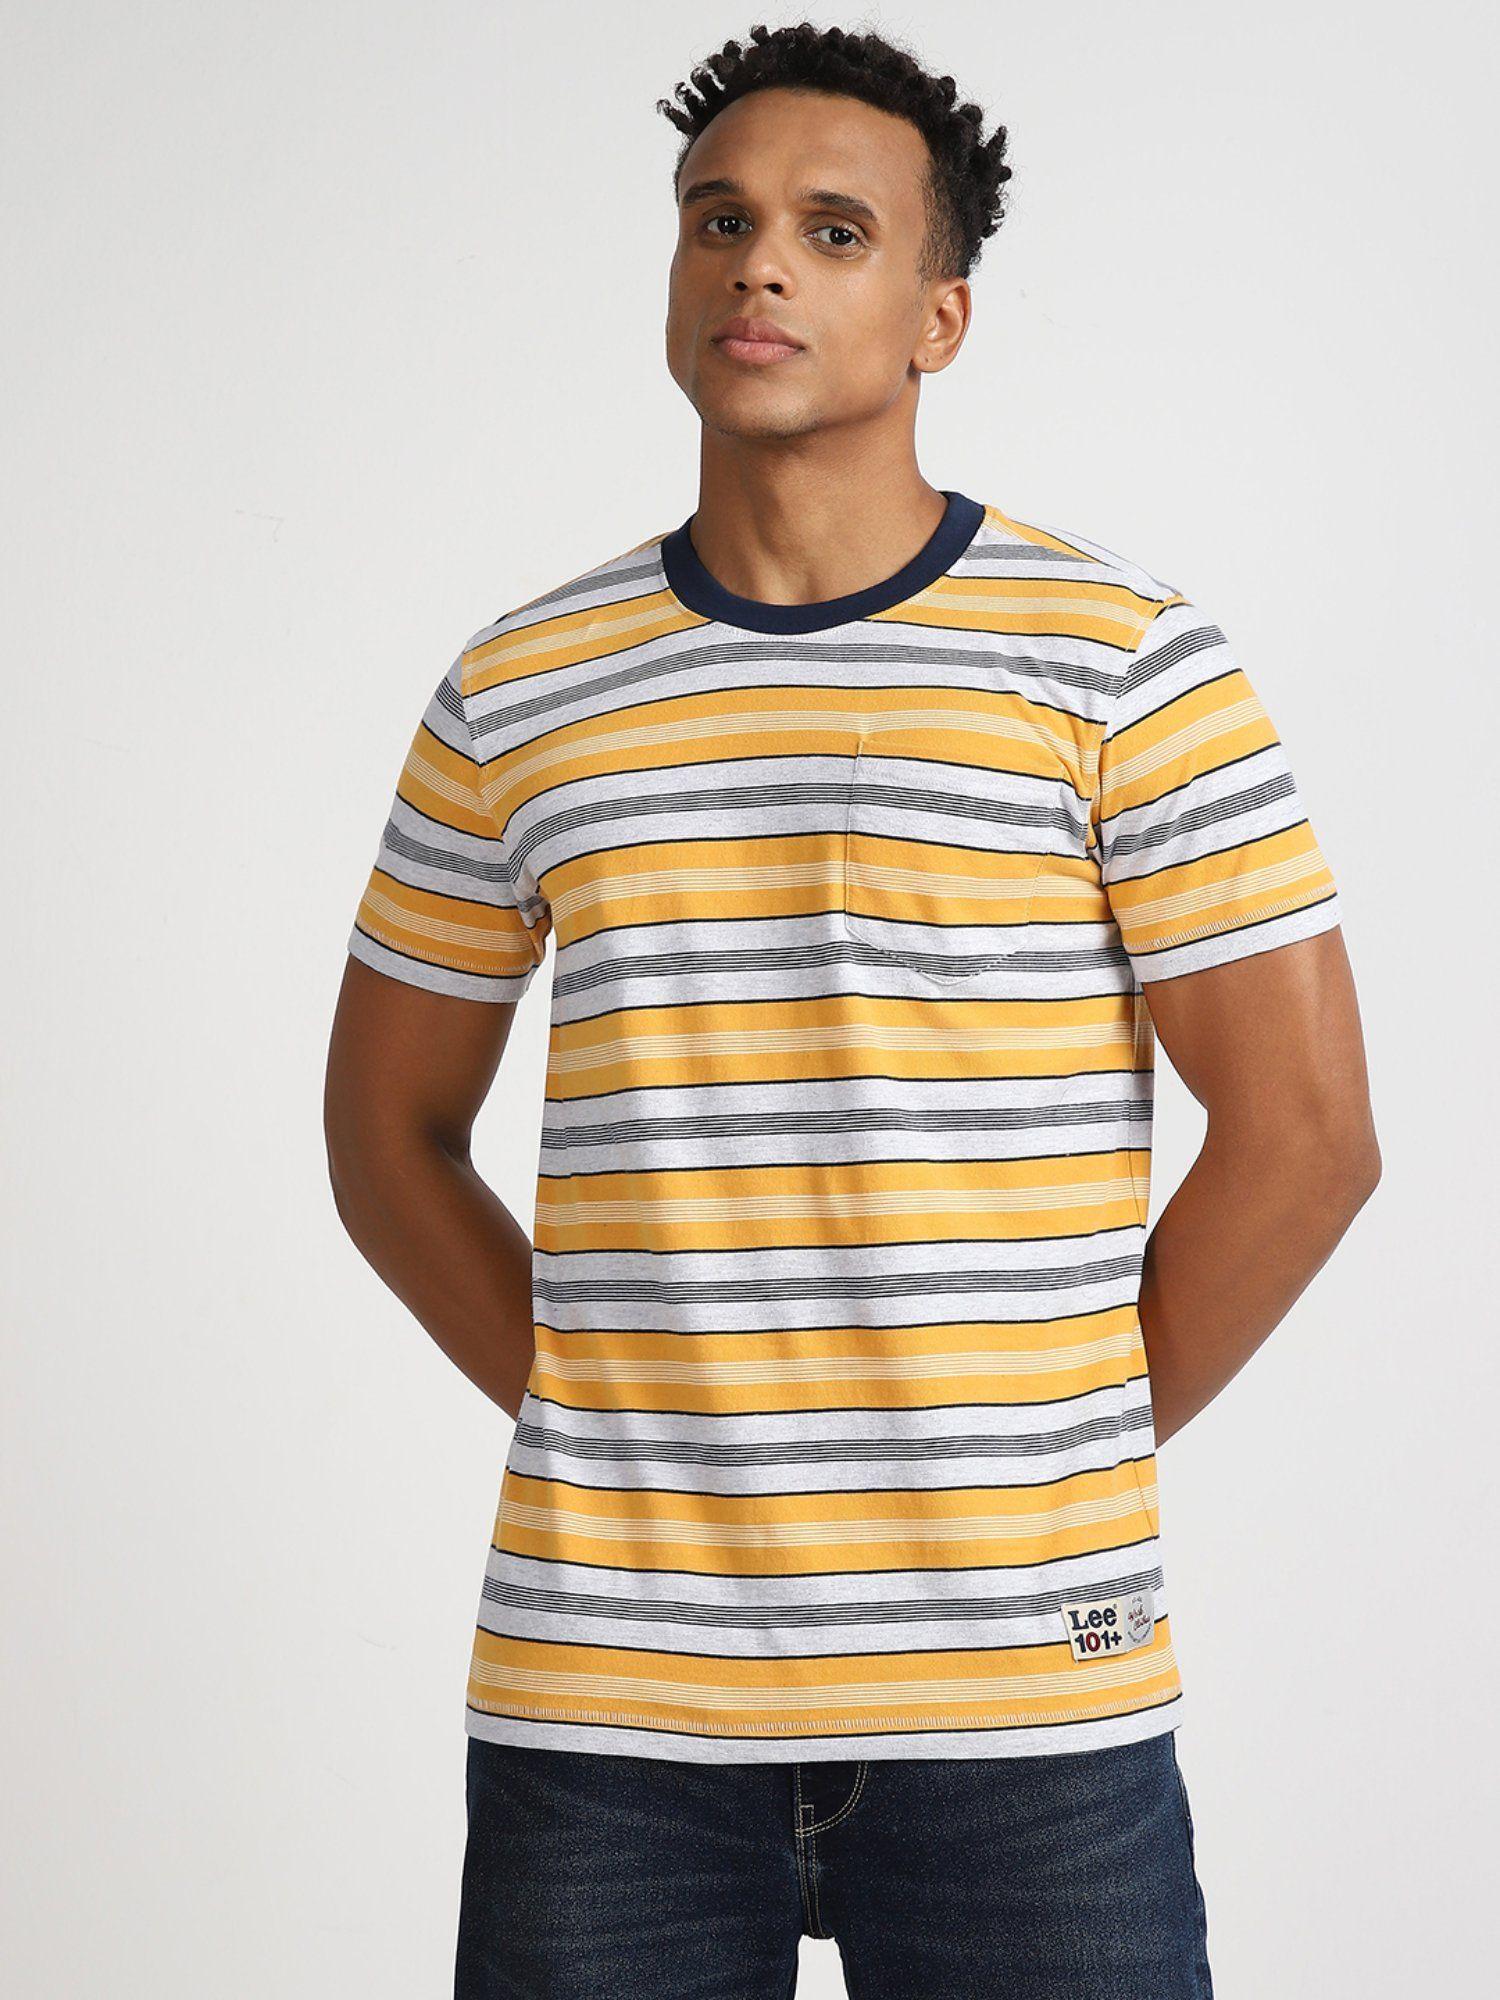 mens striped yellow retro t-shirt (regular)